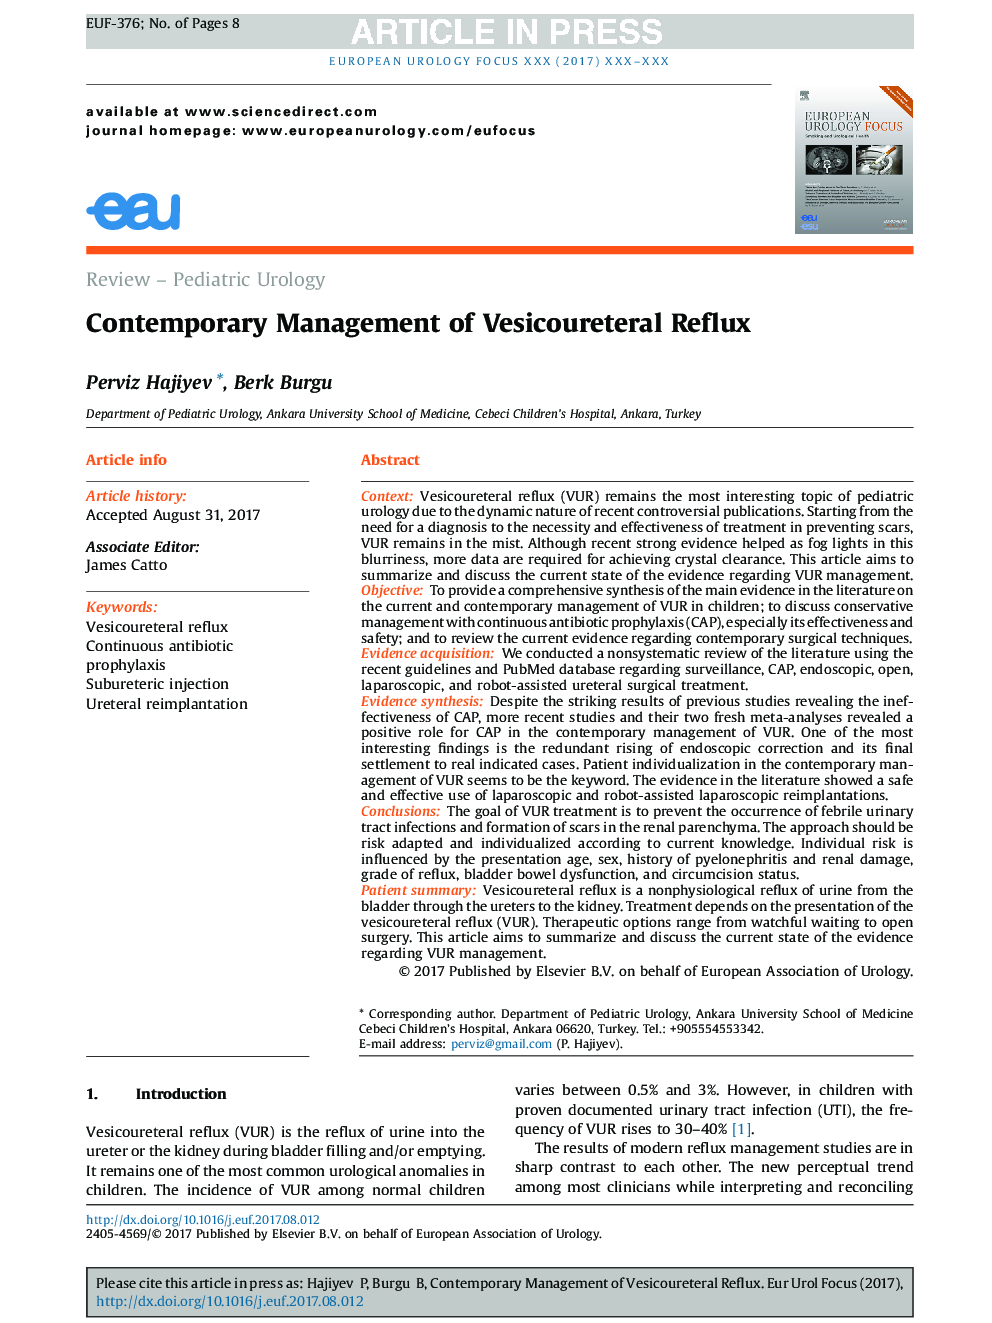 Contemporary Management of Vesicoureteral Reflux